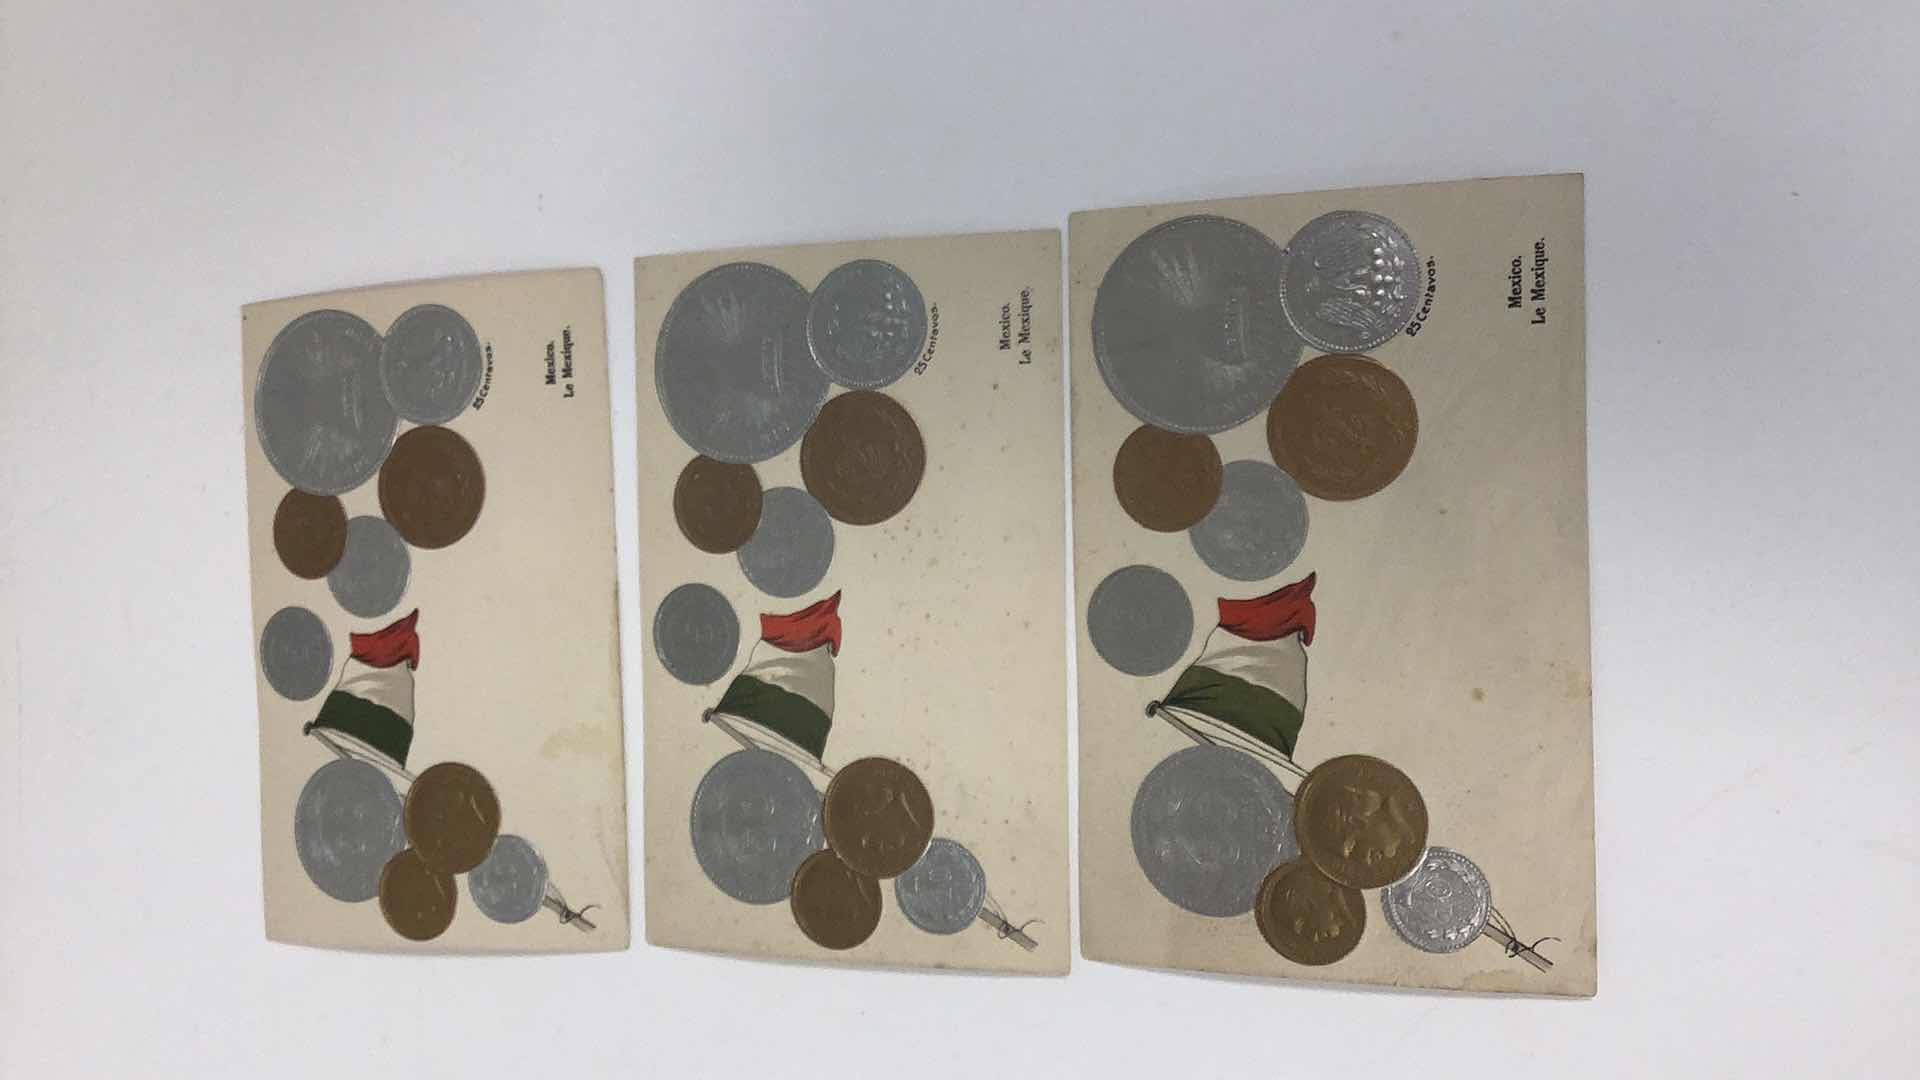 Photo 1 of 3 MEXICO COINS MONEZ VINTAGE POST CARDS